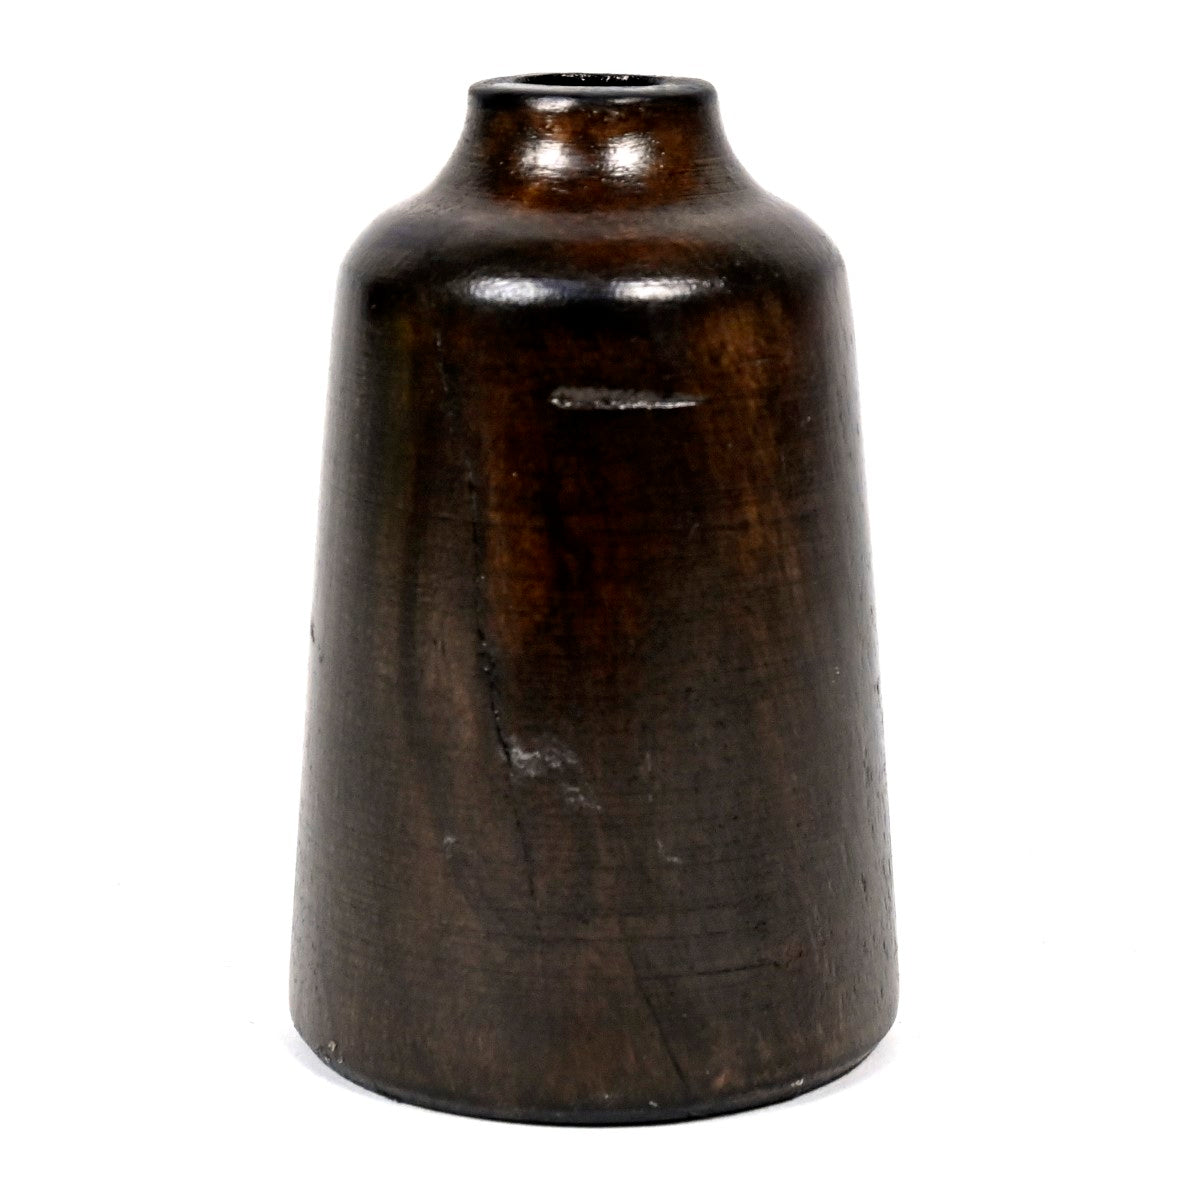 Wooden Dry bud vase